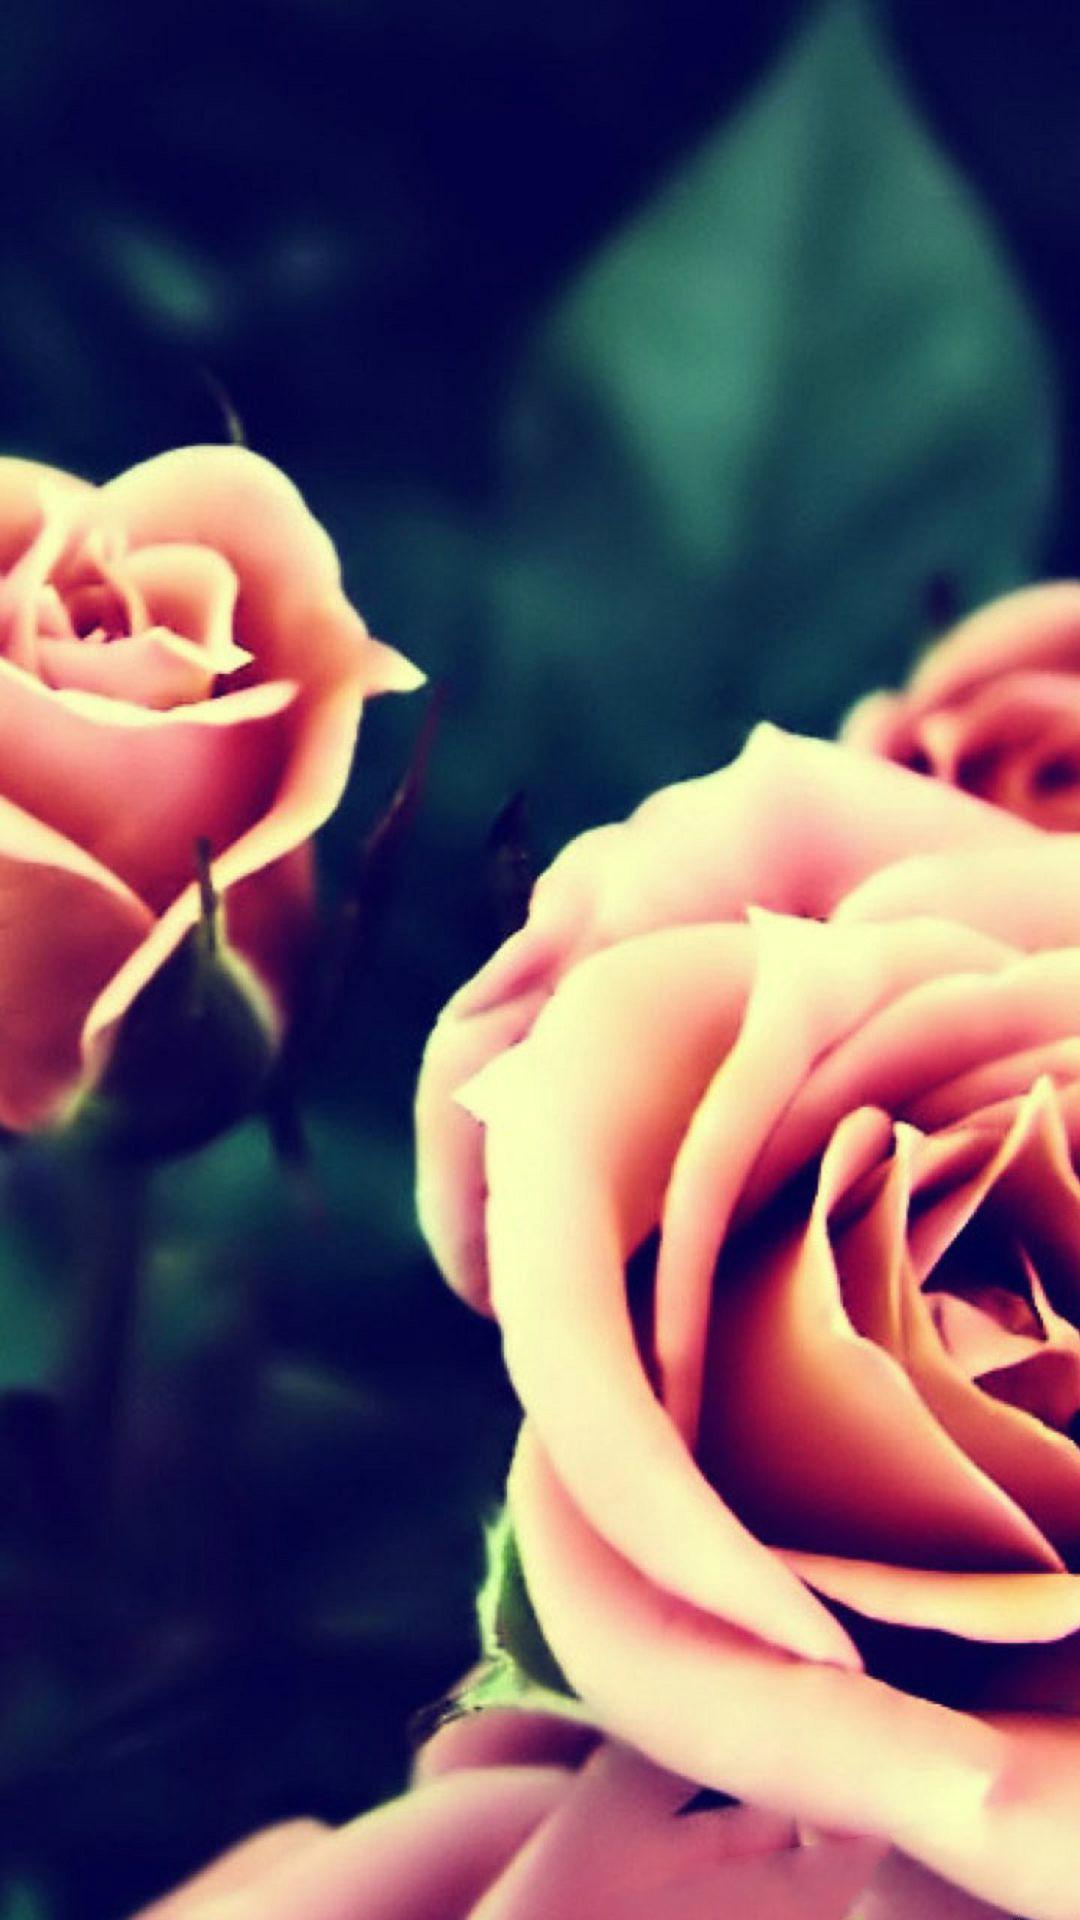 Vintage Pink Roses Closeup iPhone 8 Wallpaper Free Download